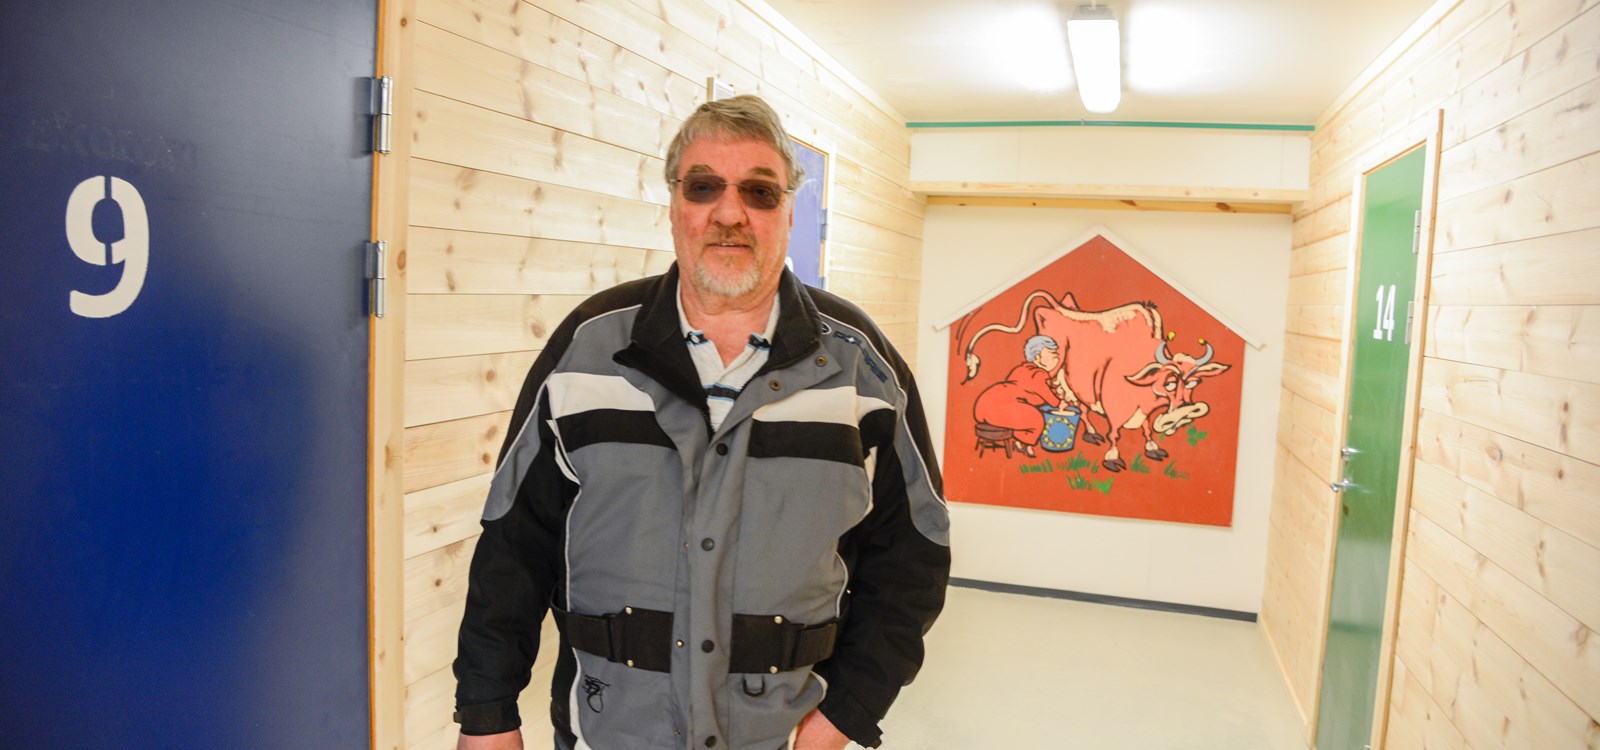 Kunstnar Sigmund Årseth har måla både EU-kua på ytterveggen og minivarianten som heng inne i Vang lagerhotell som Leif Jan Hammerstad no har starta opp.